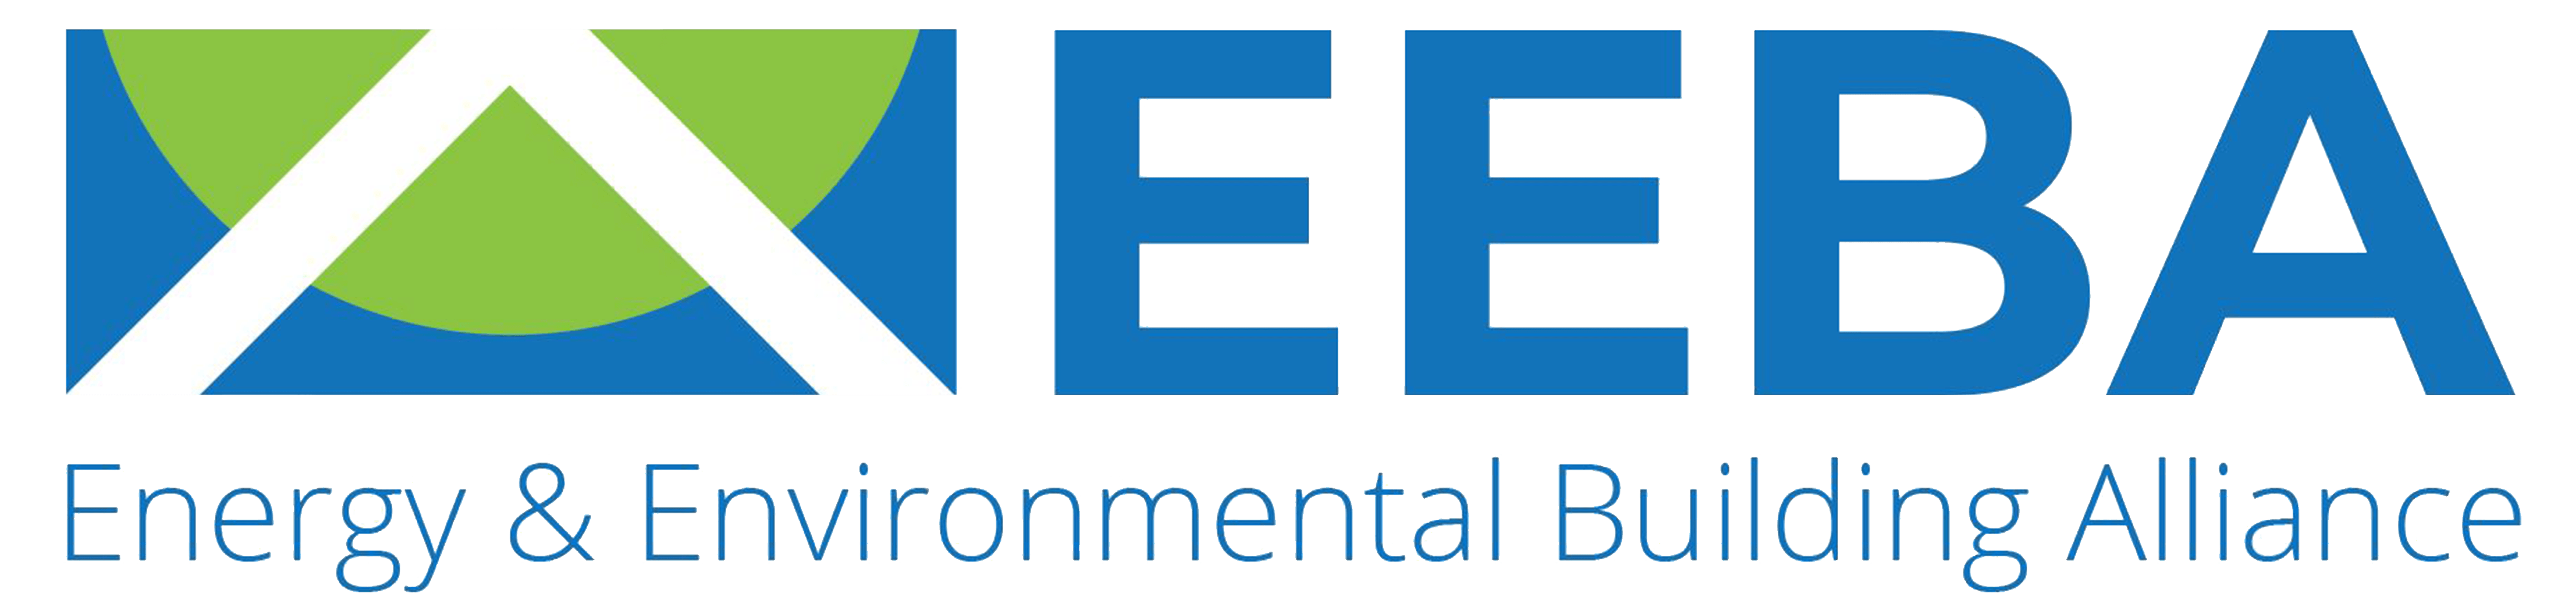 Energy and Environmental Building Alliance logo